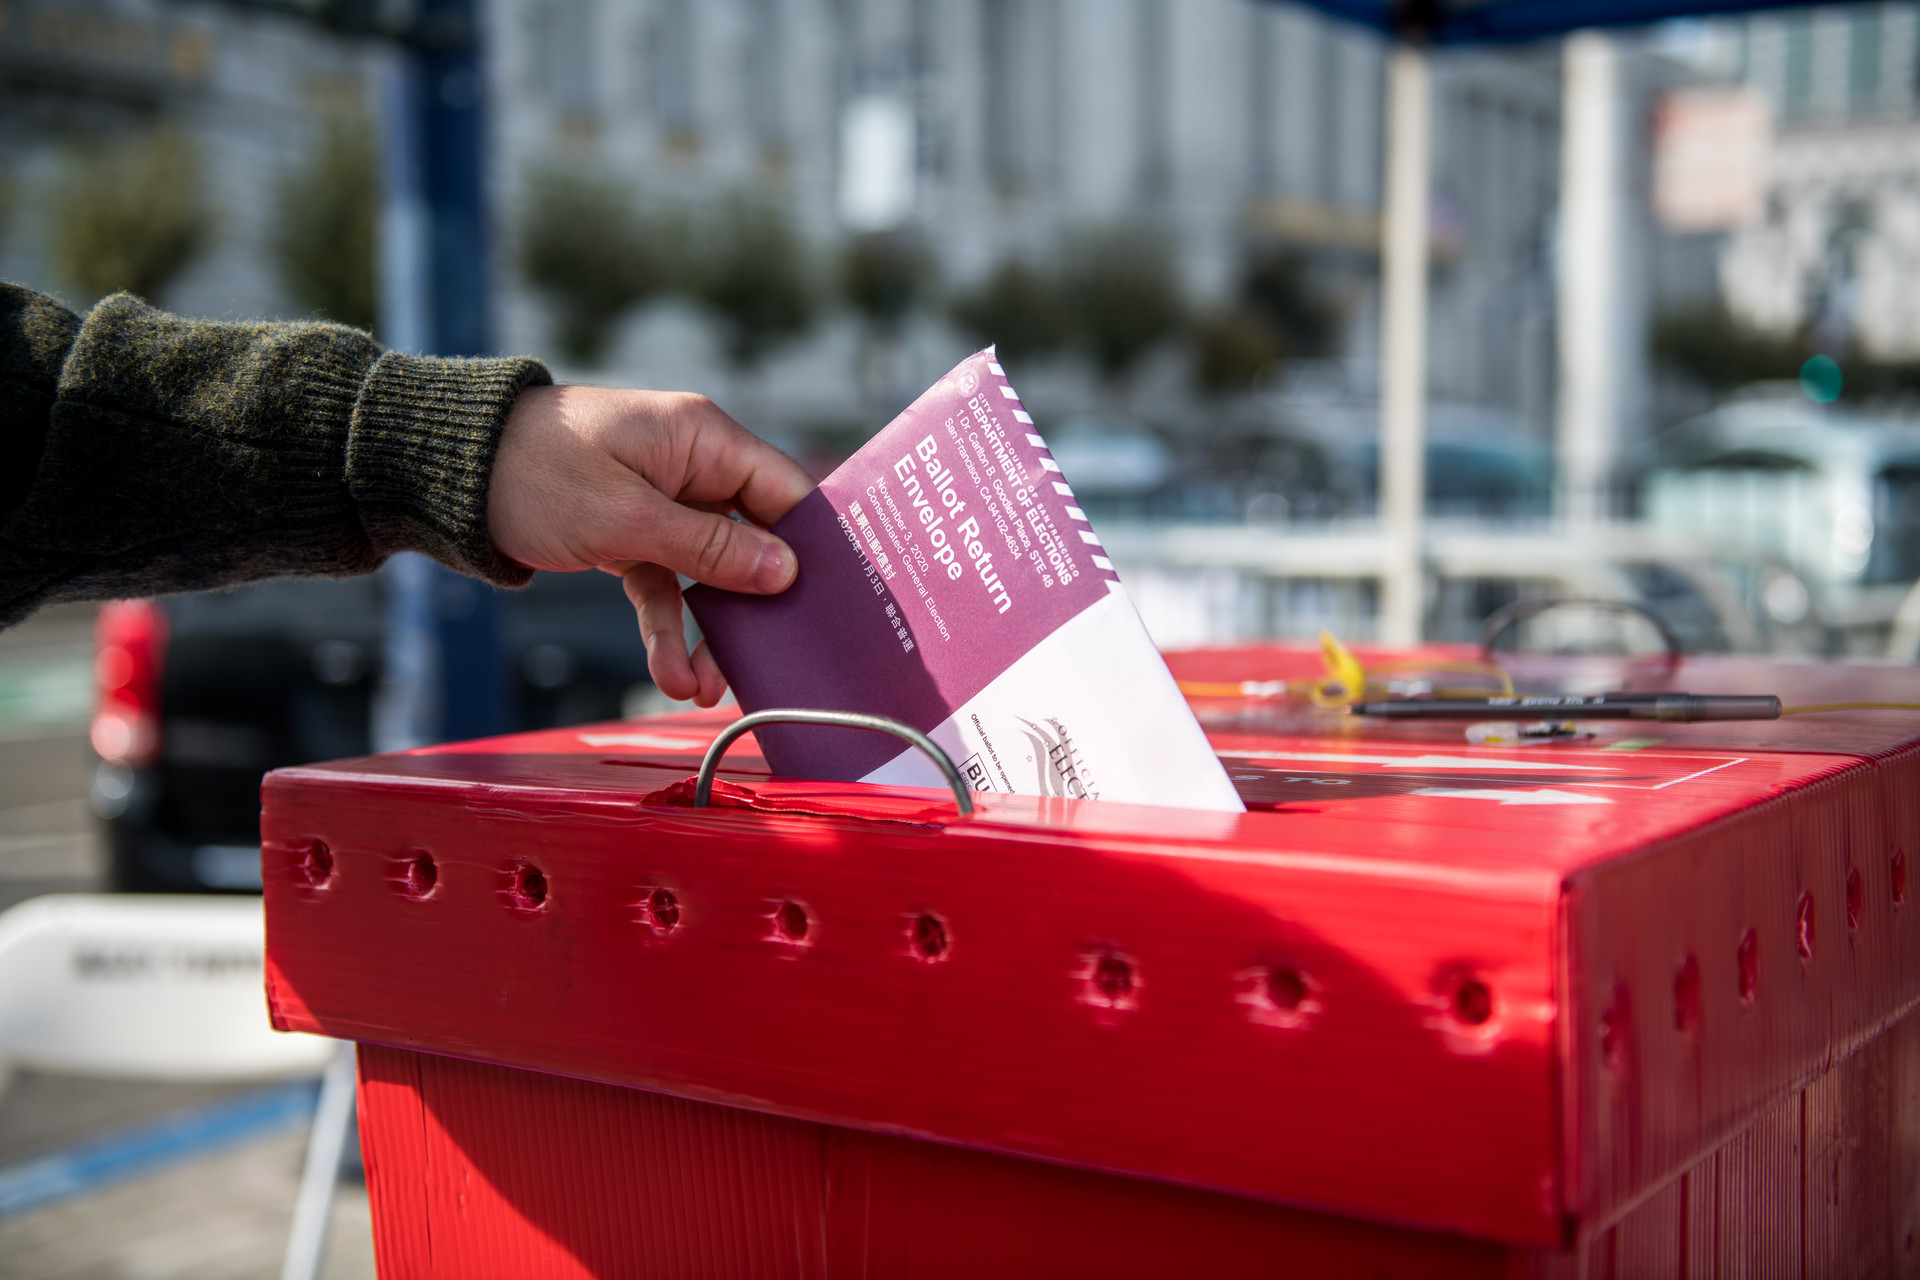 Hand holding ballot drops it in red cardboard ballot box